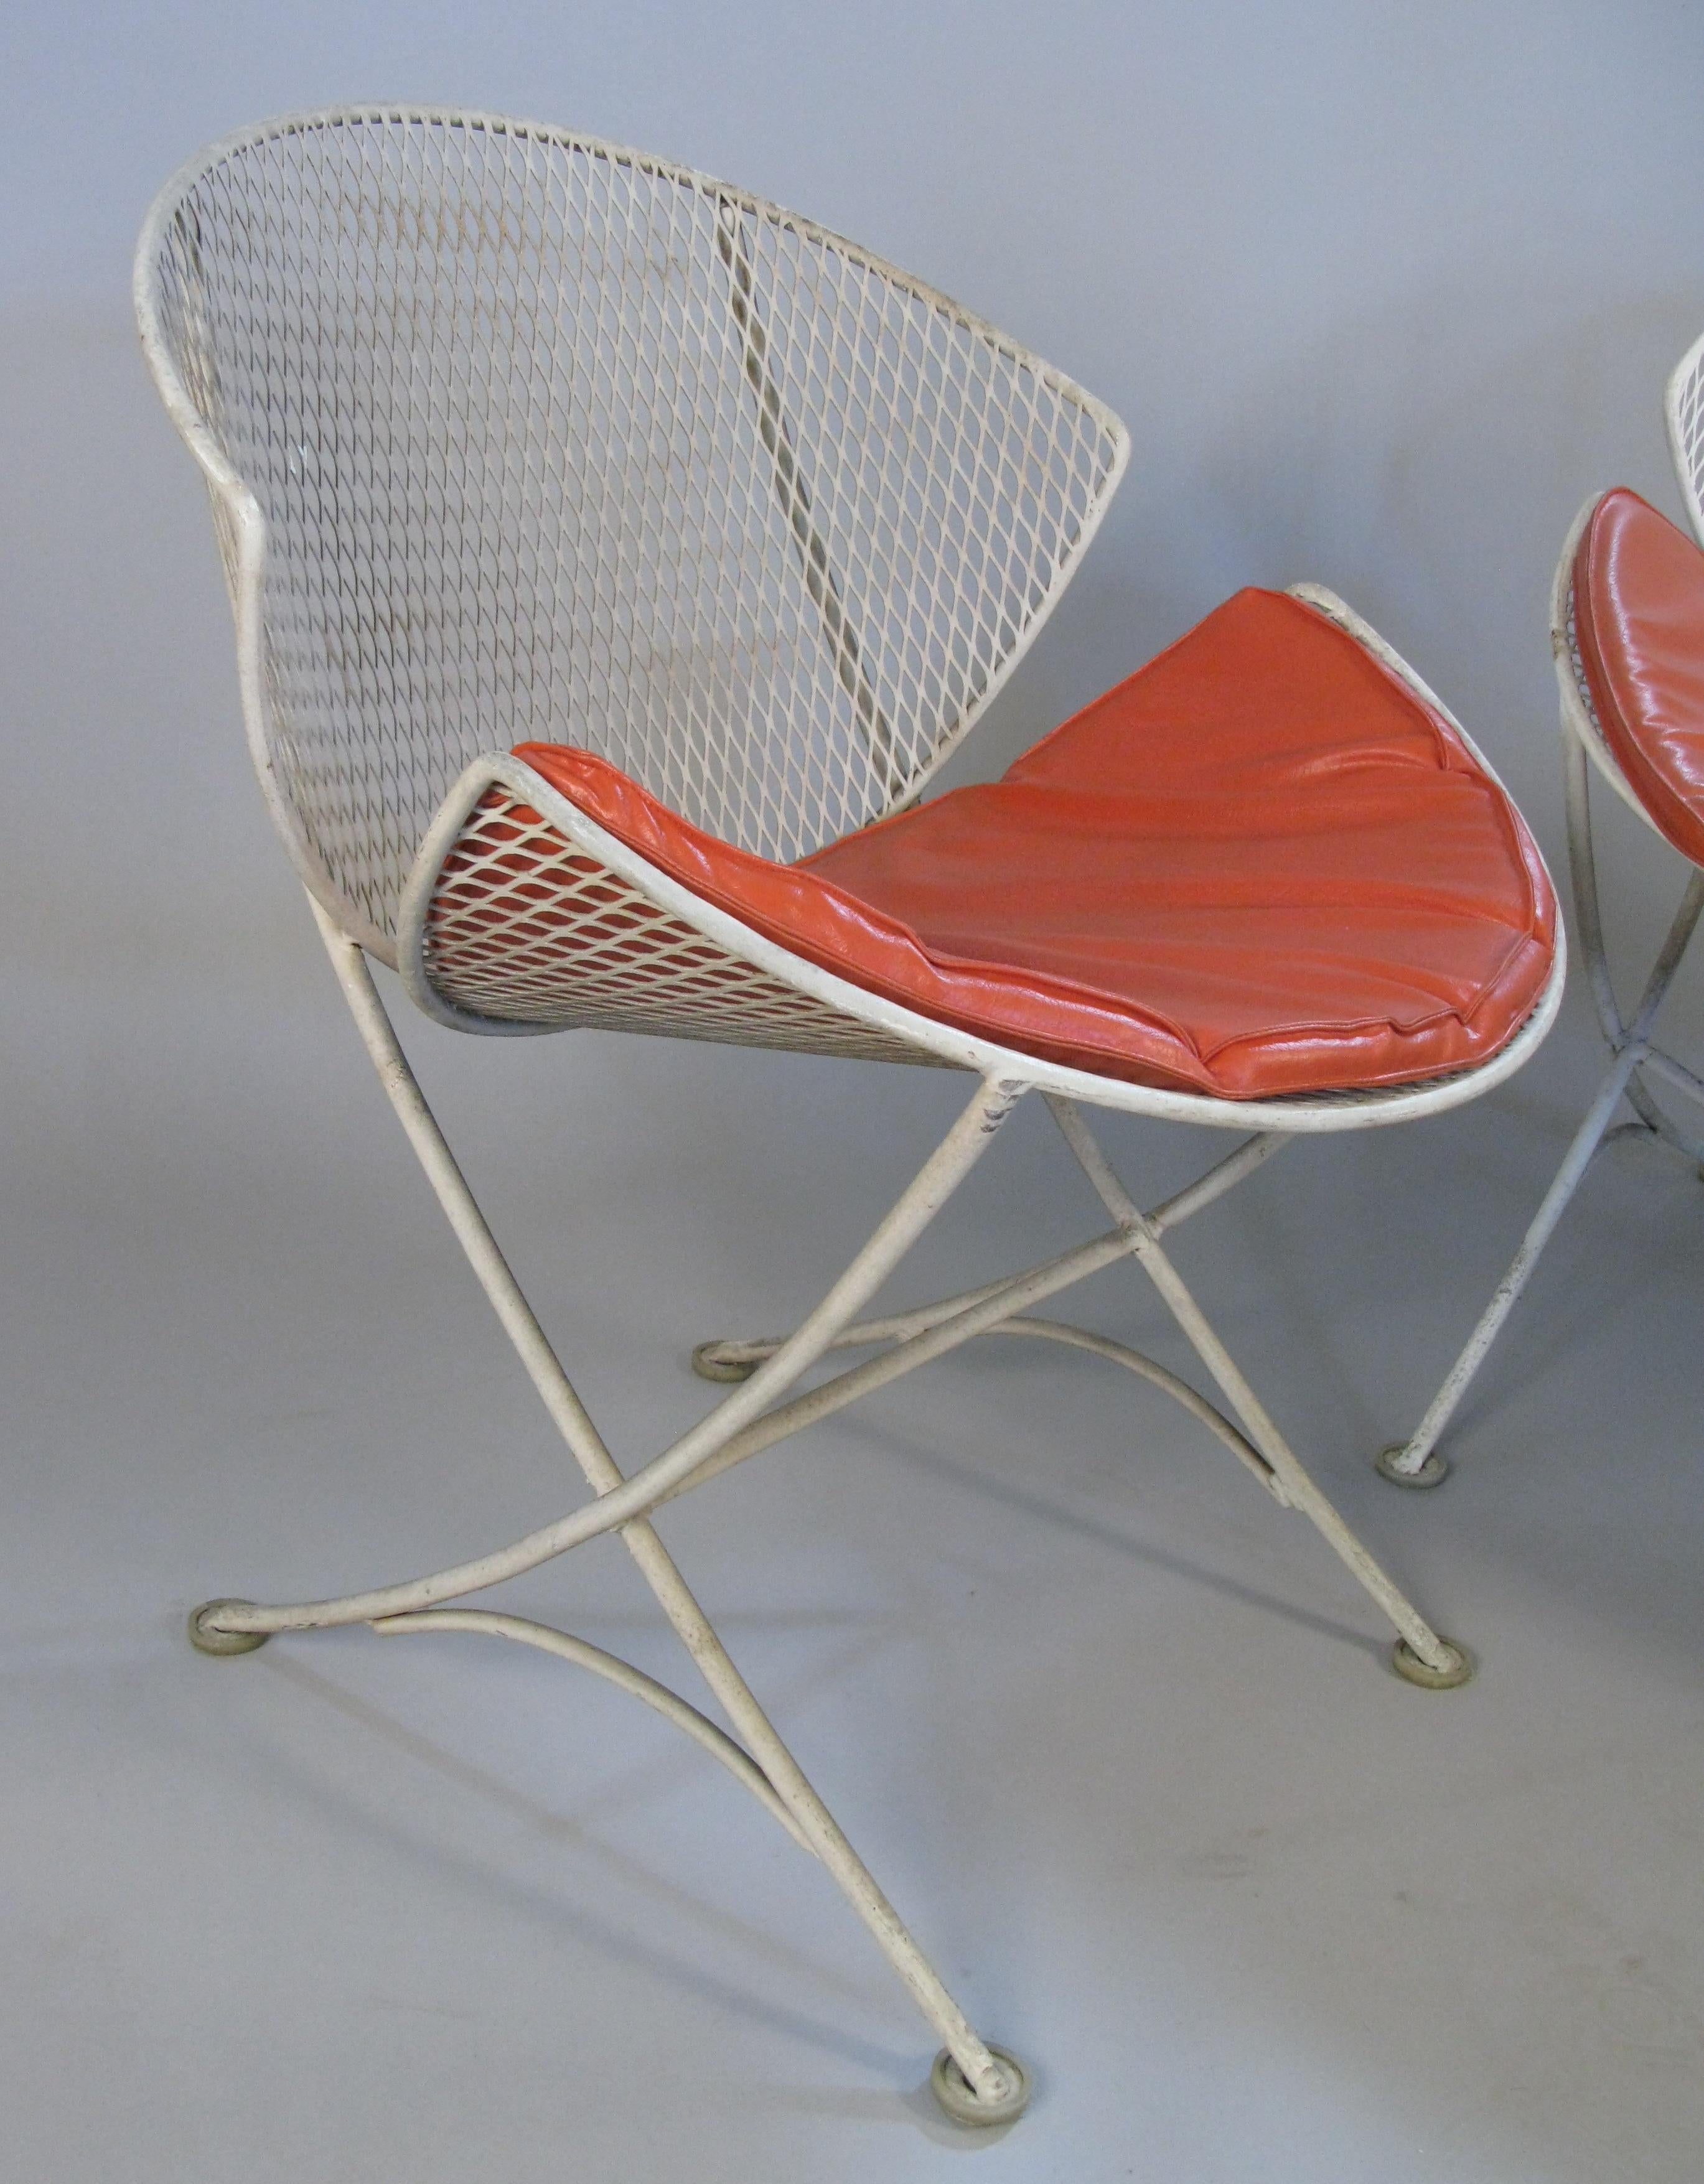 salterini orange slice chairs